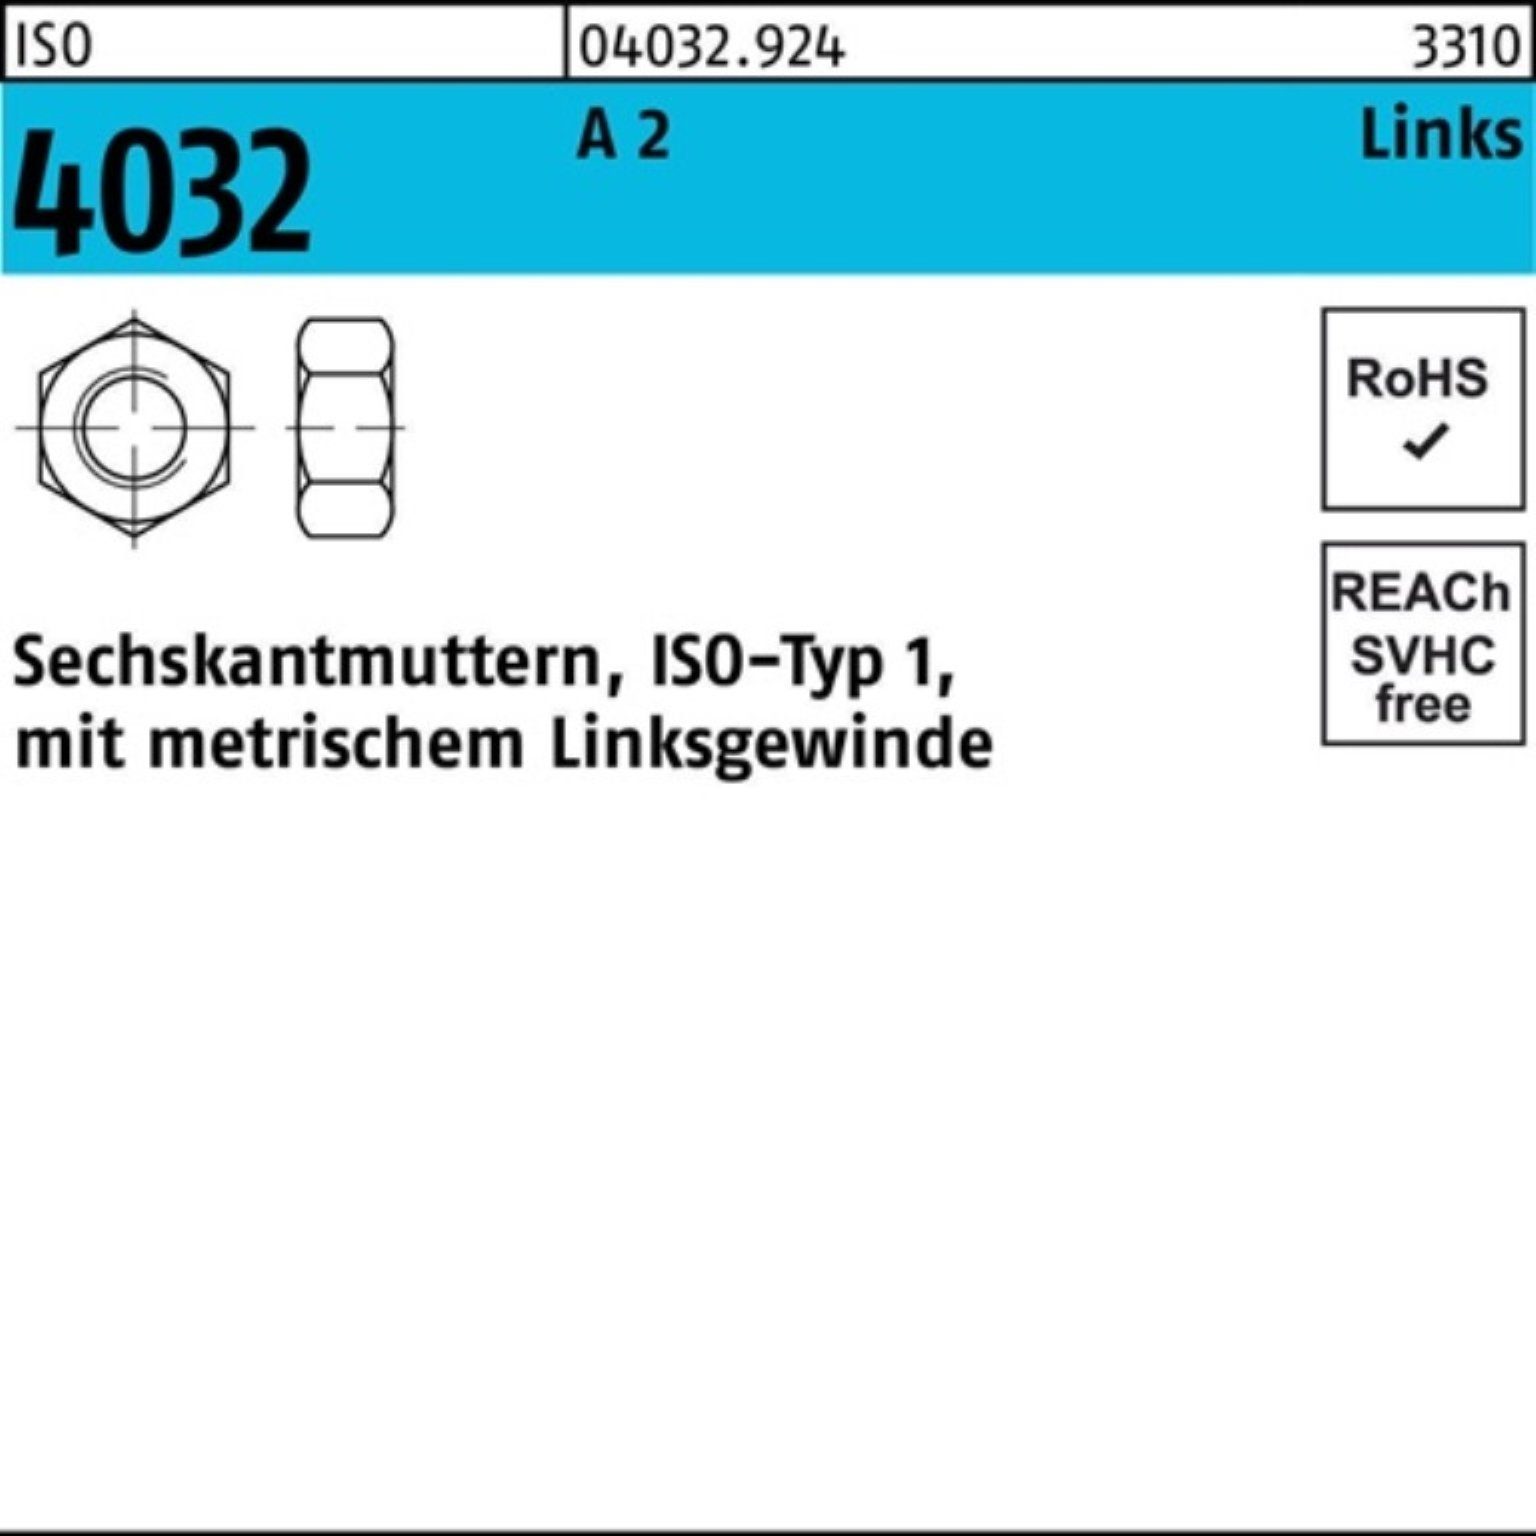 M5 ISO Sechskantmutter (70) Pack 4032 100er ISO 2 Bufab links Muttern 100 Stück A